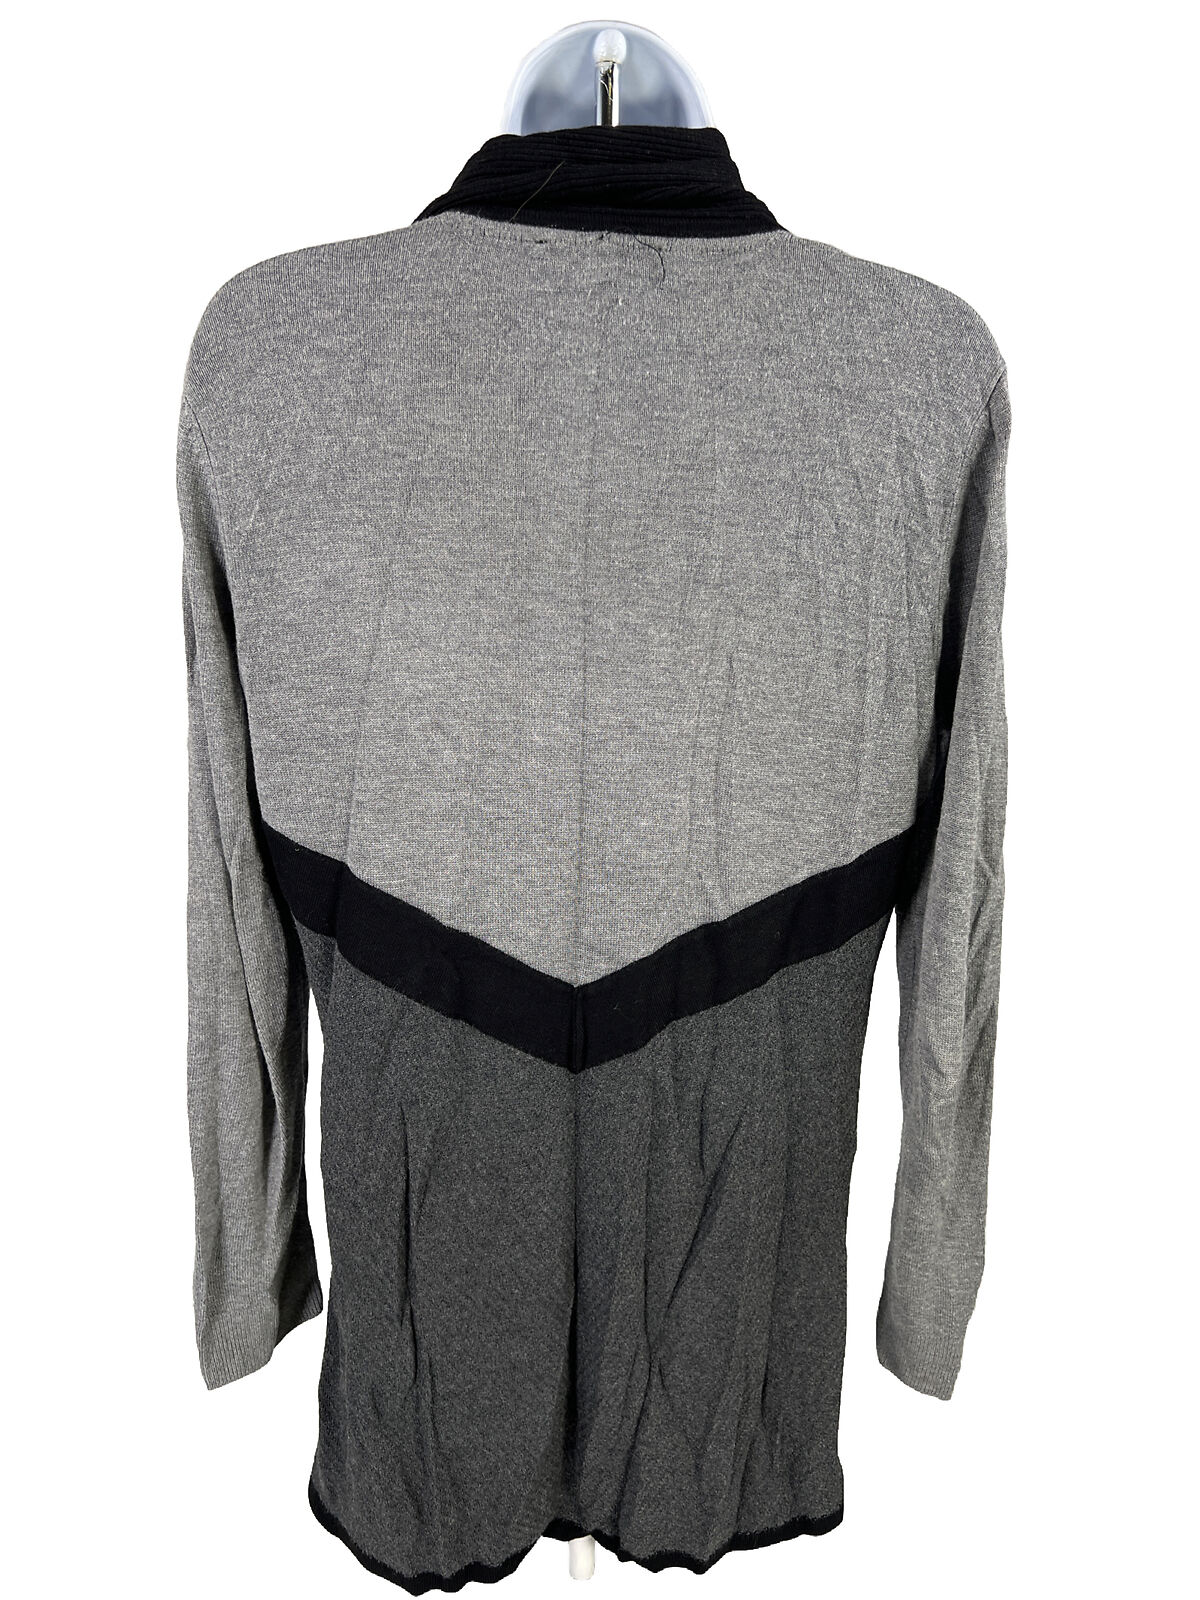 White House Black Market Women's Black/Gray Cardigan Sweater - M